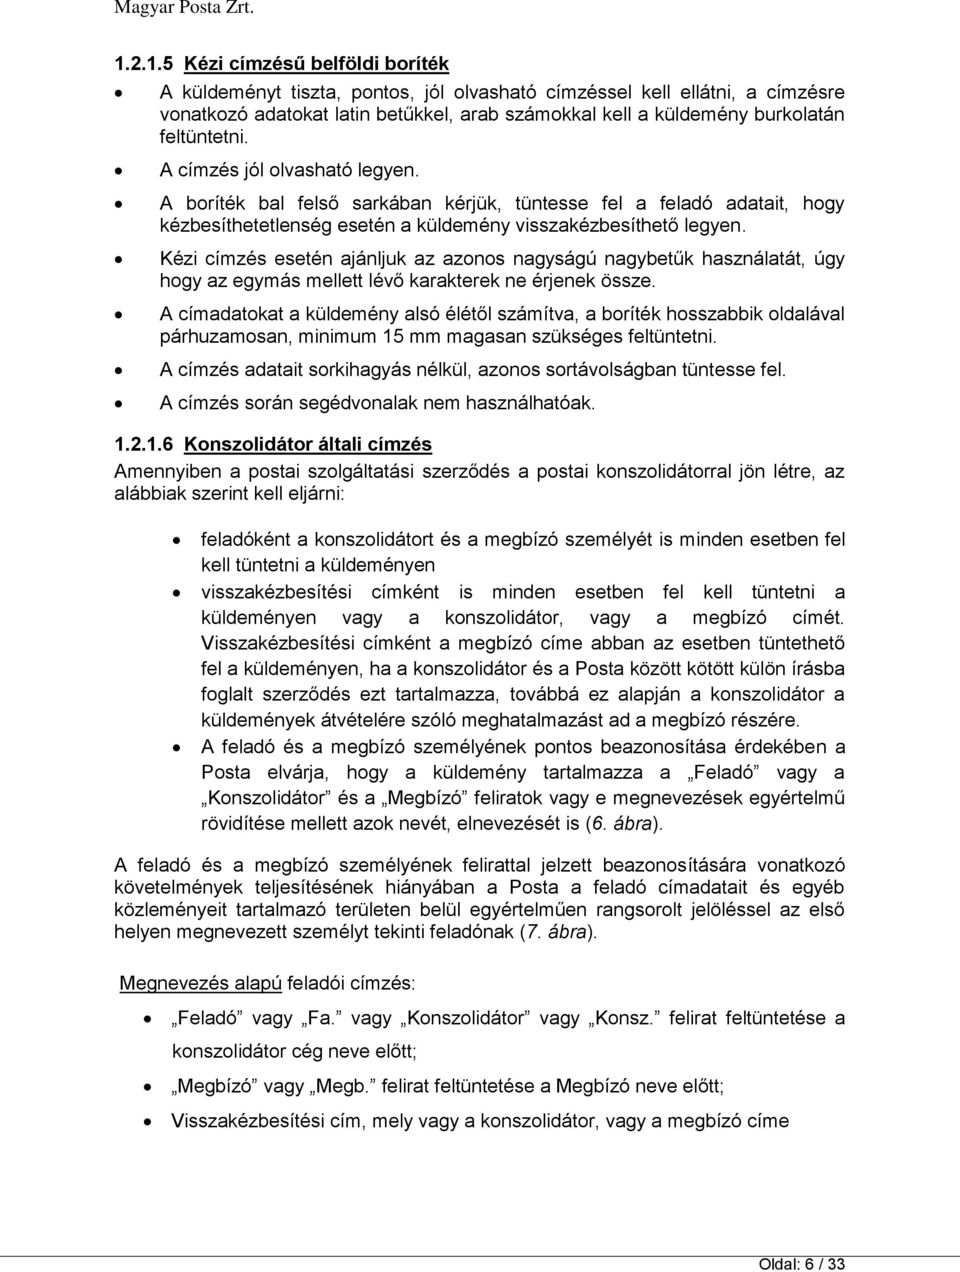 Magyar Posta Zrt. Tartalomjegyzék - PDF Free Download